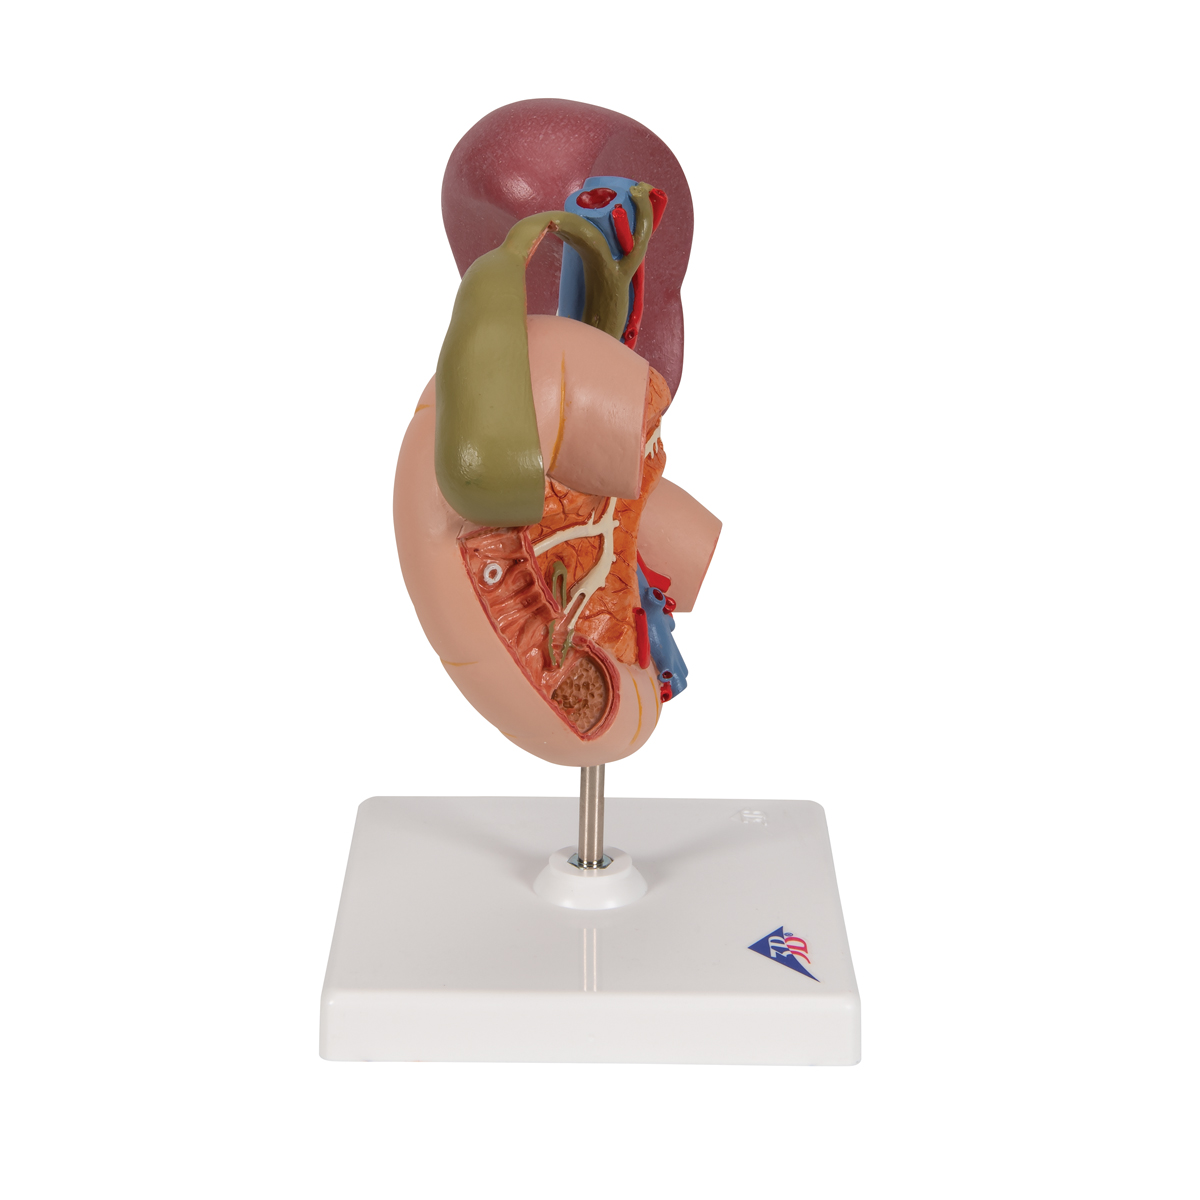 Life Size Model Of Rear Organs Of Upper Abdomen 3b Smart Anatomy